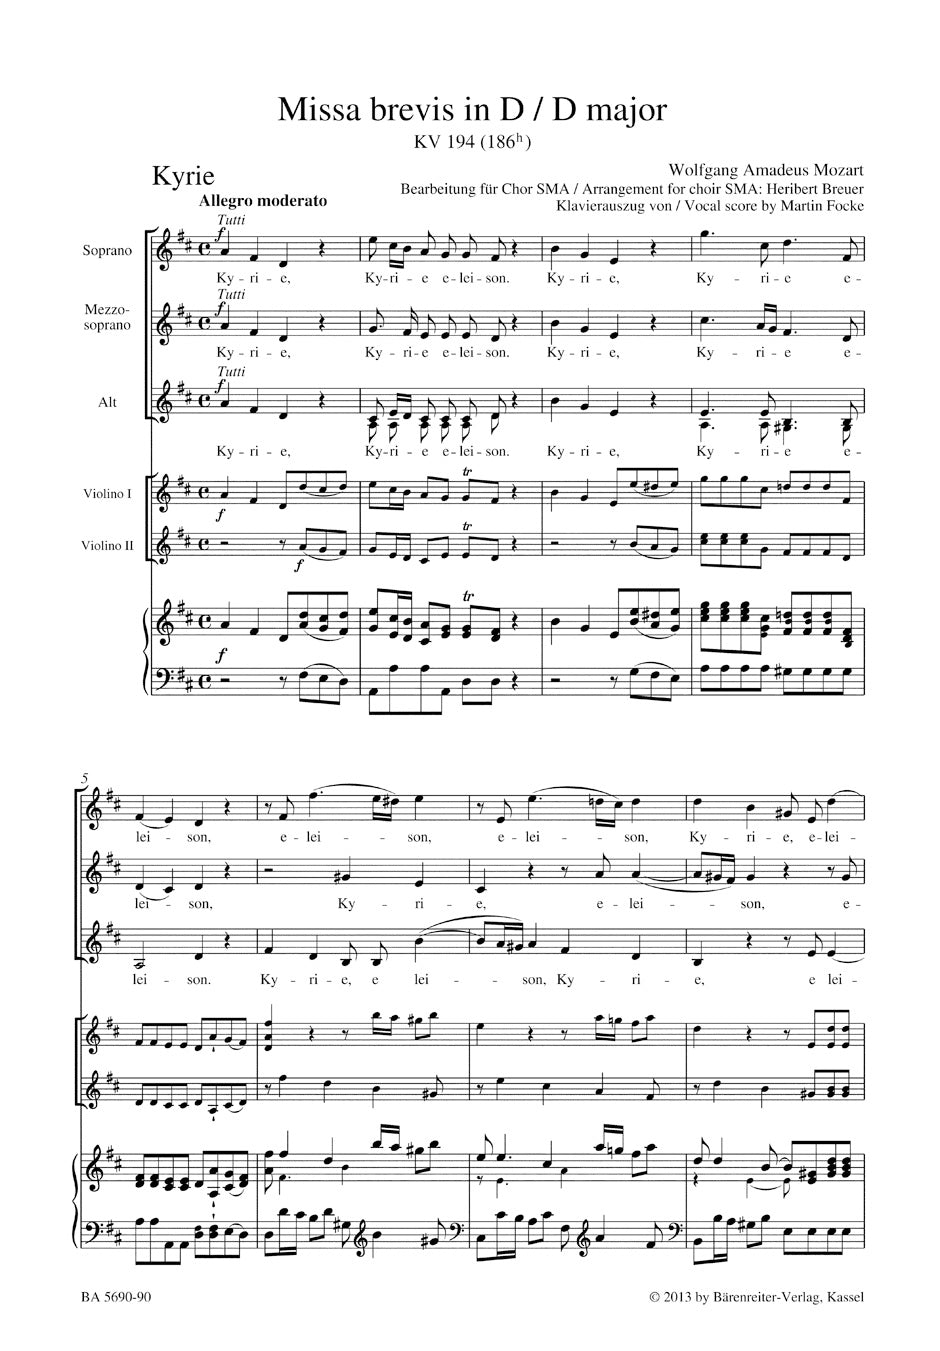 Mozart Missa brevis D major K. 194 (186h) (Arranged for female choir (SMA))